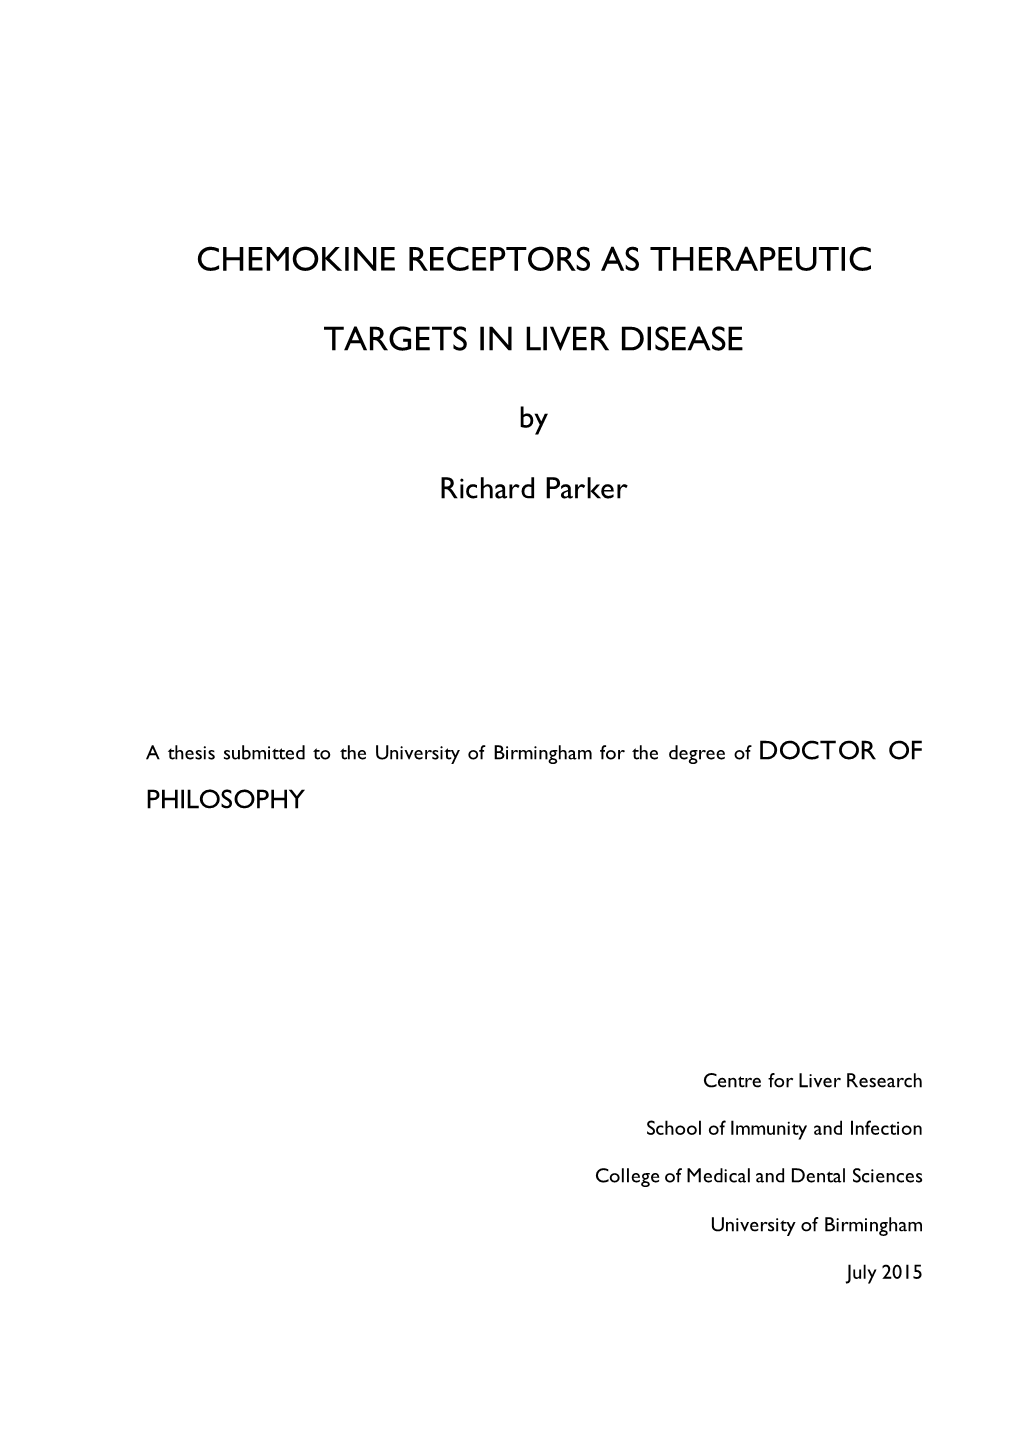 Chemokine Receptors As Therapeutic Targets in Liver Disease